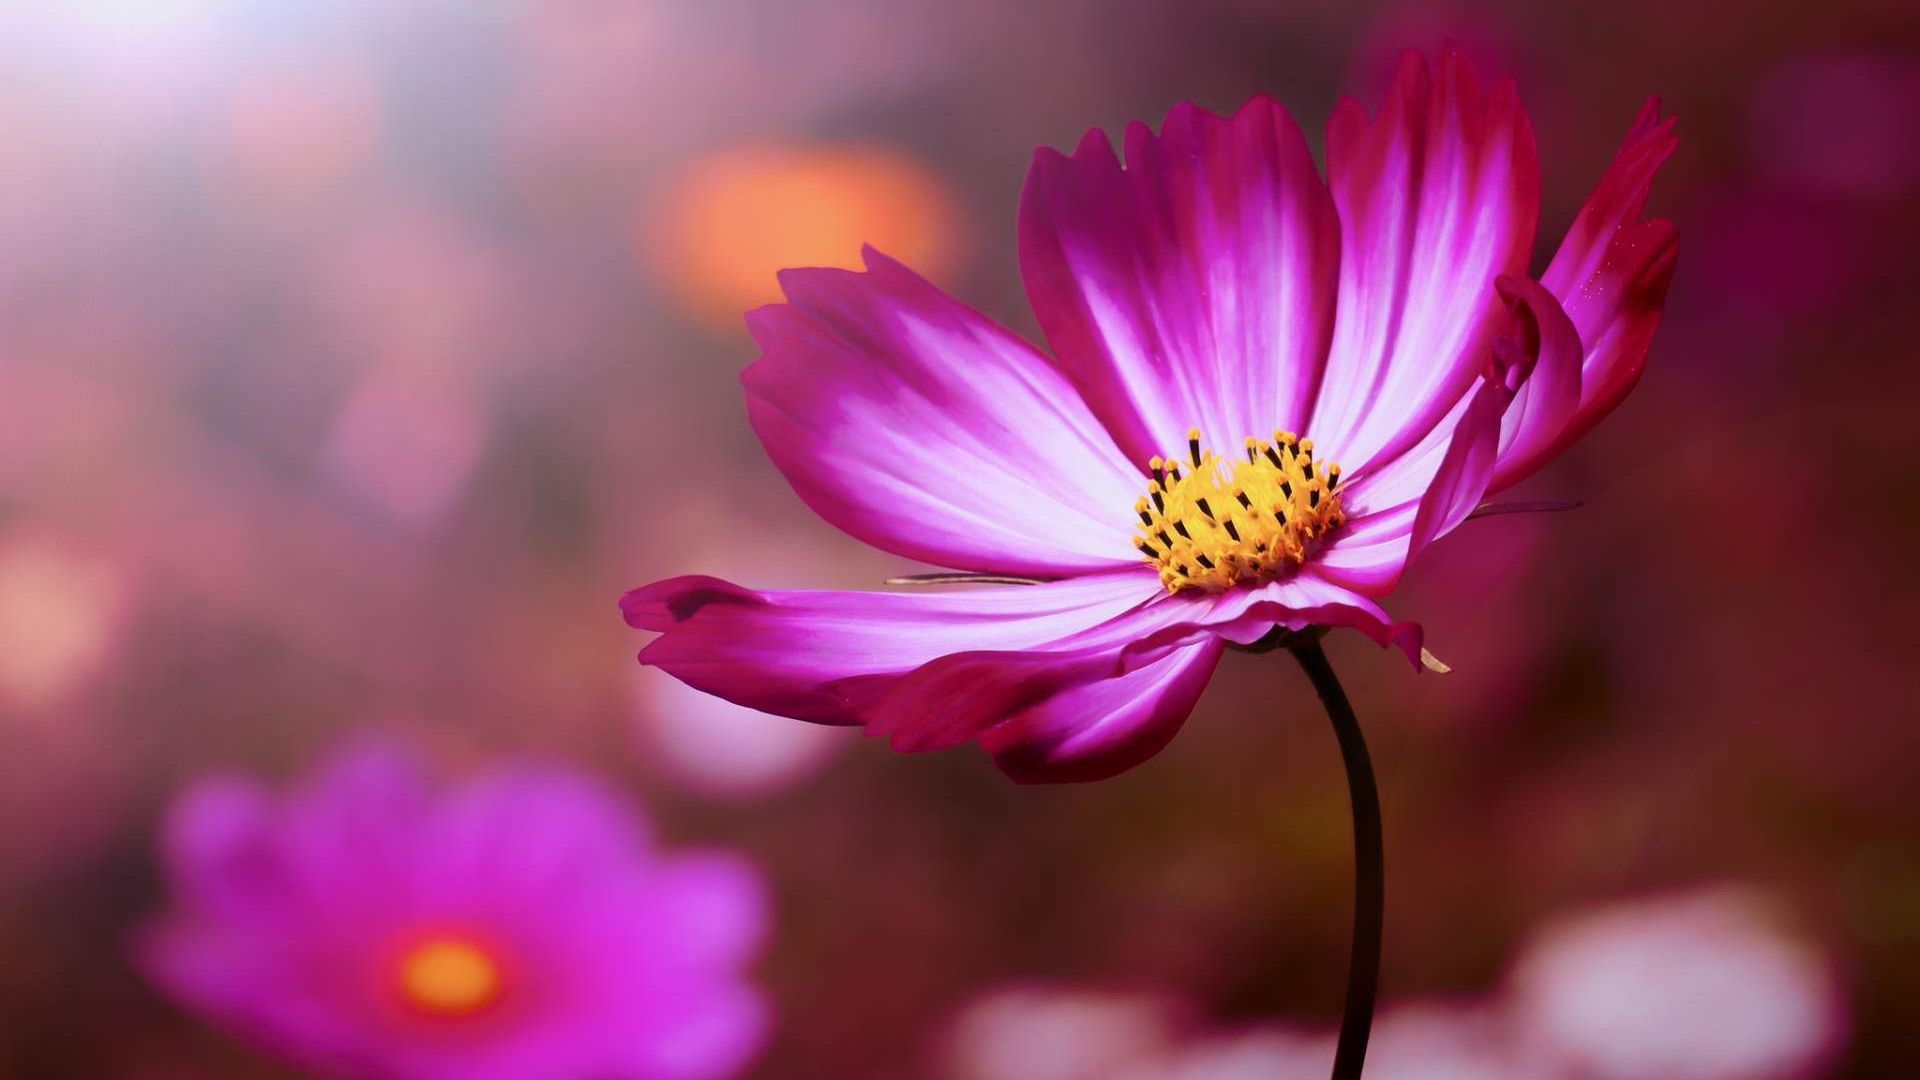 Desktop Wallpaper Pink Cosmos Flower, Hd Image, Picture, Background, 8r2vbn